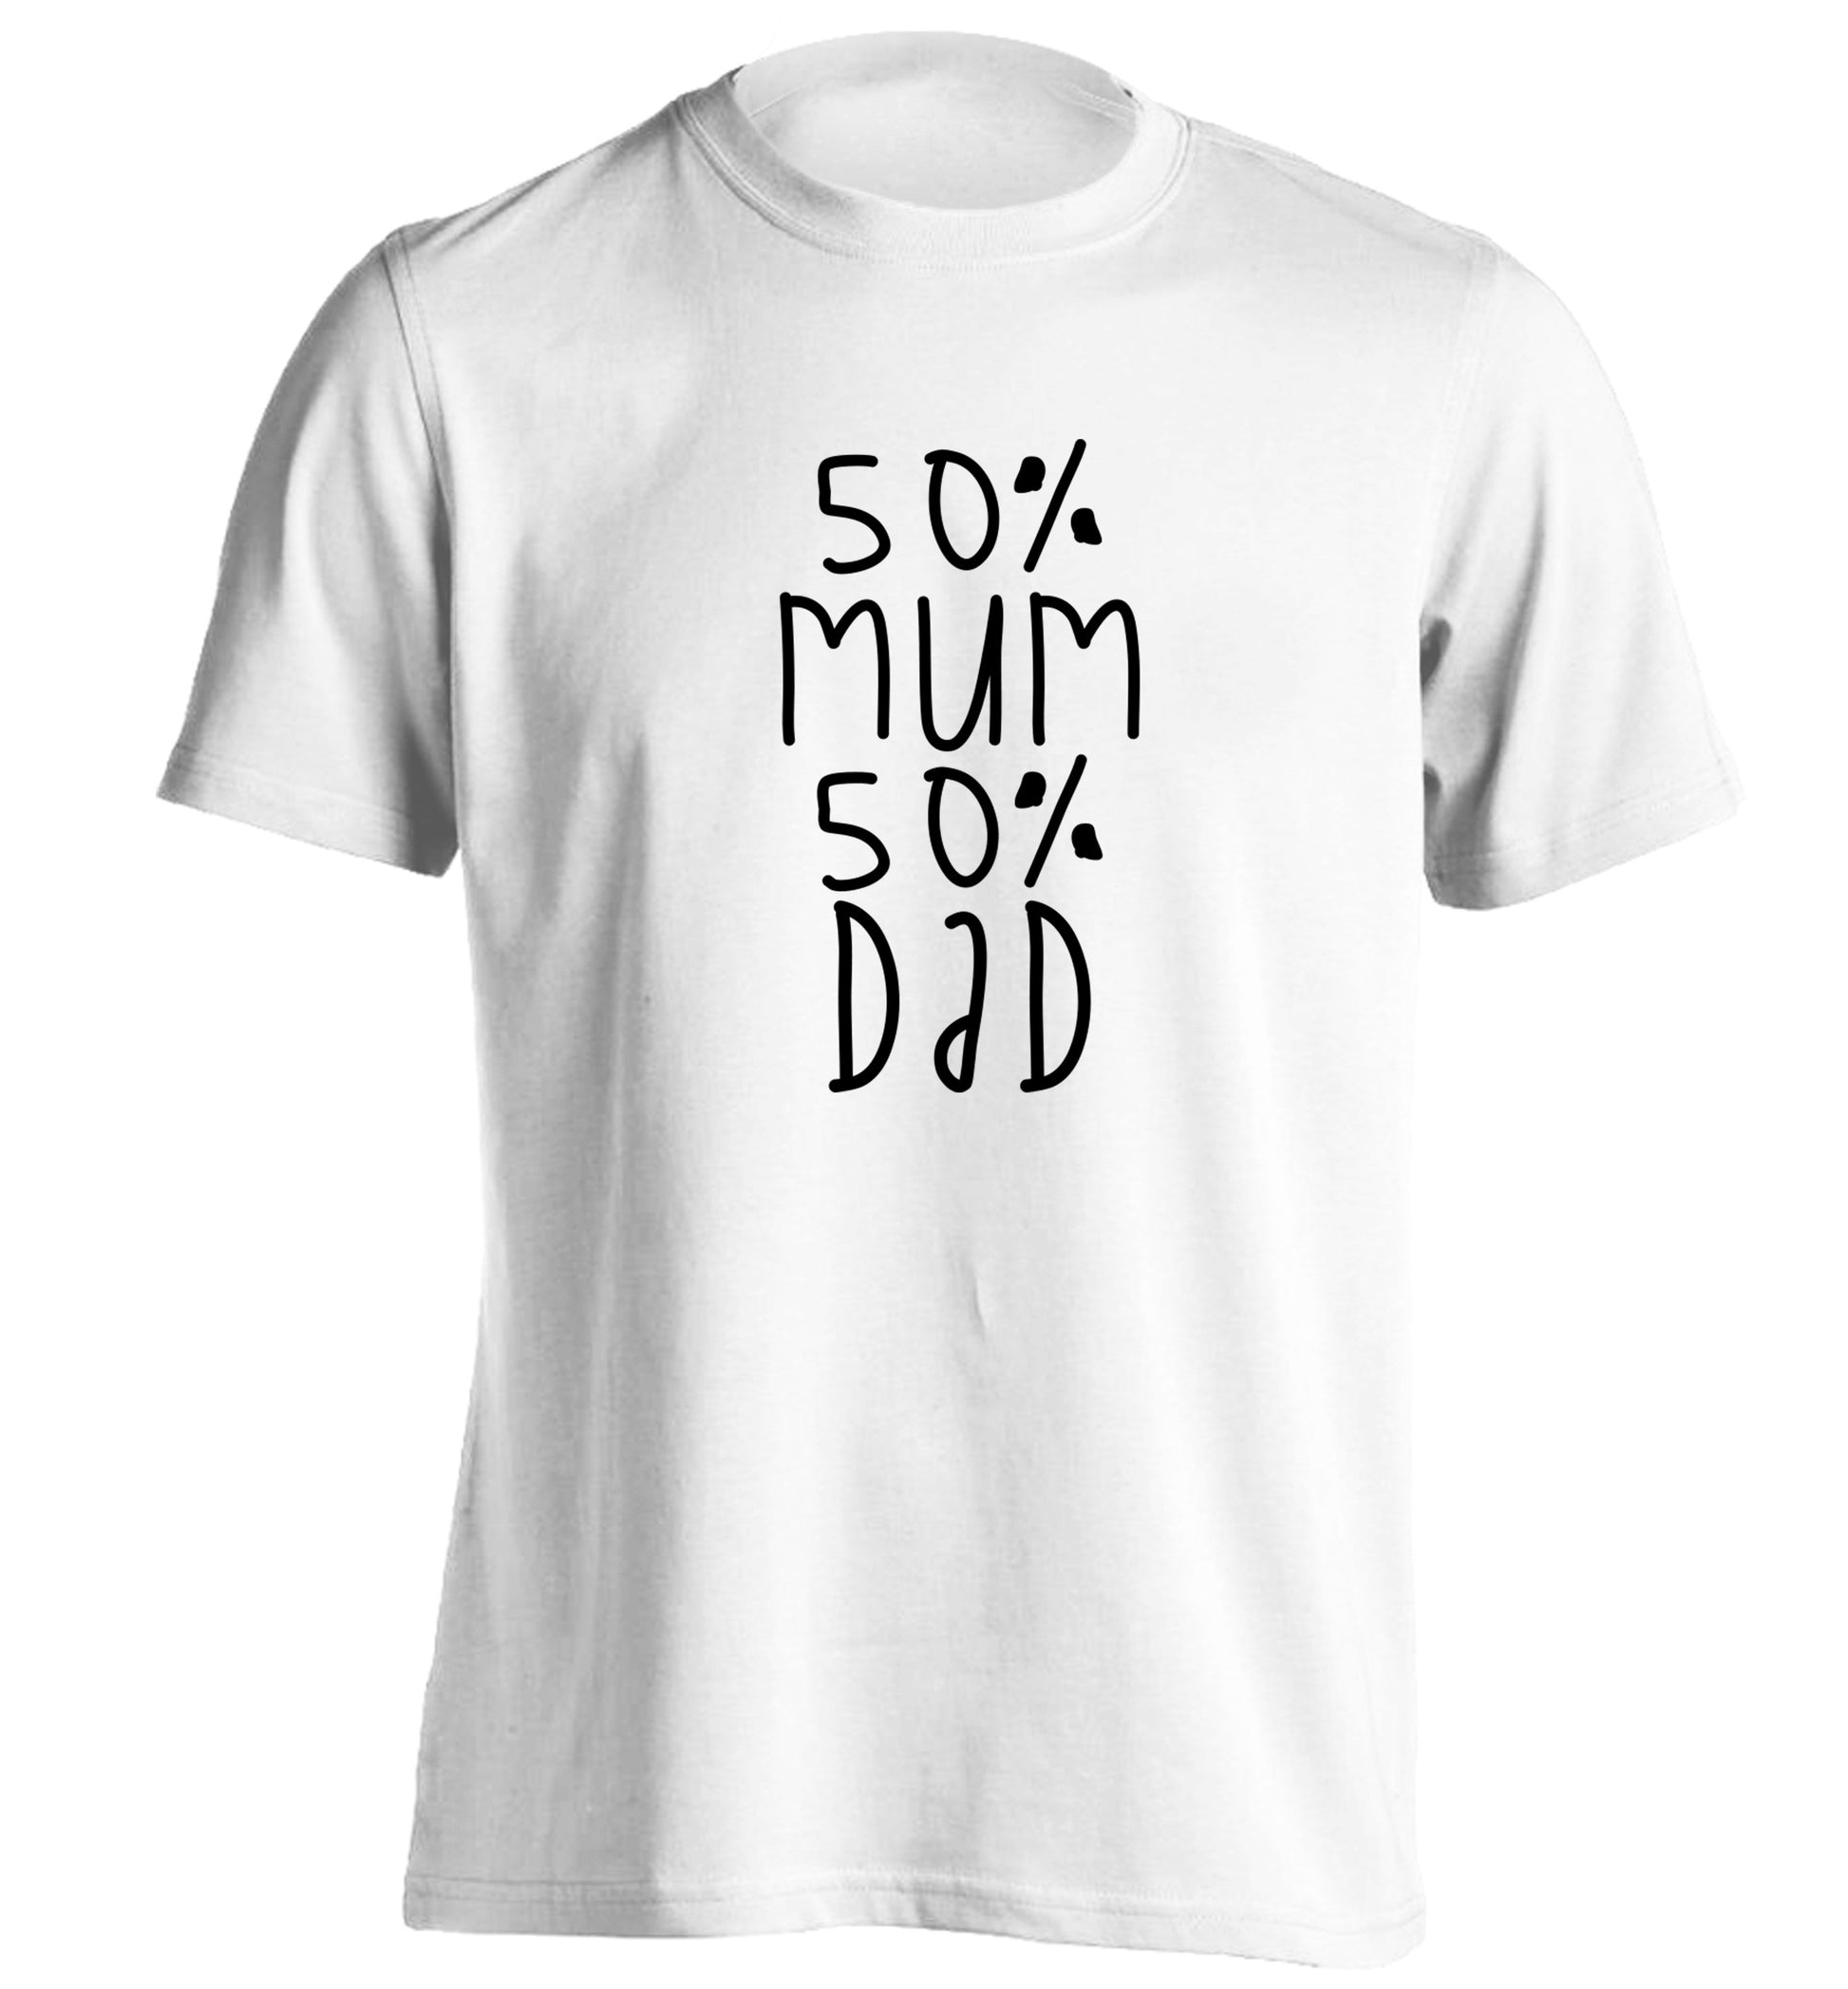 50% mum 50% dad adults unisex white Tshirt 2XL